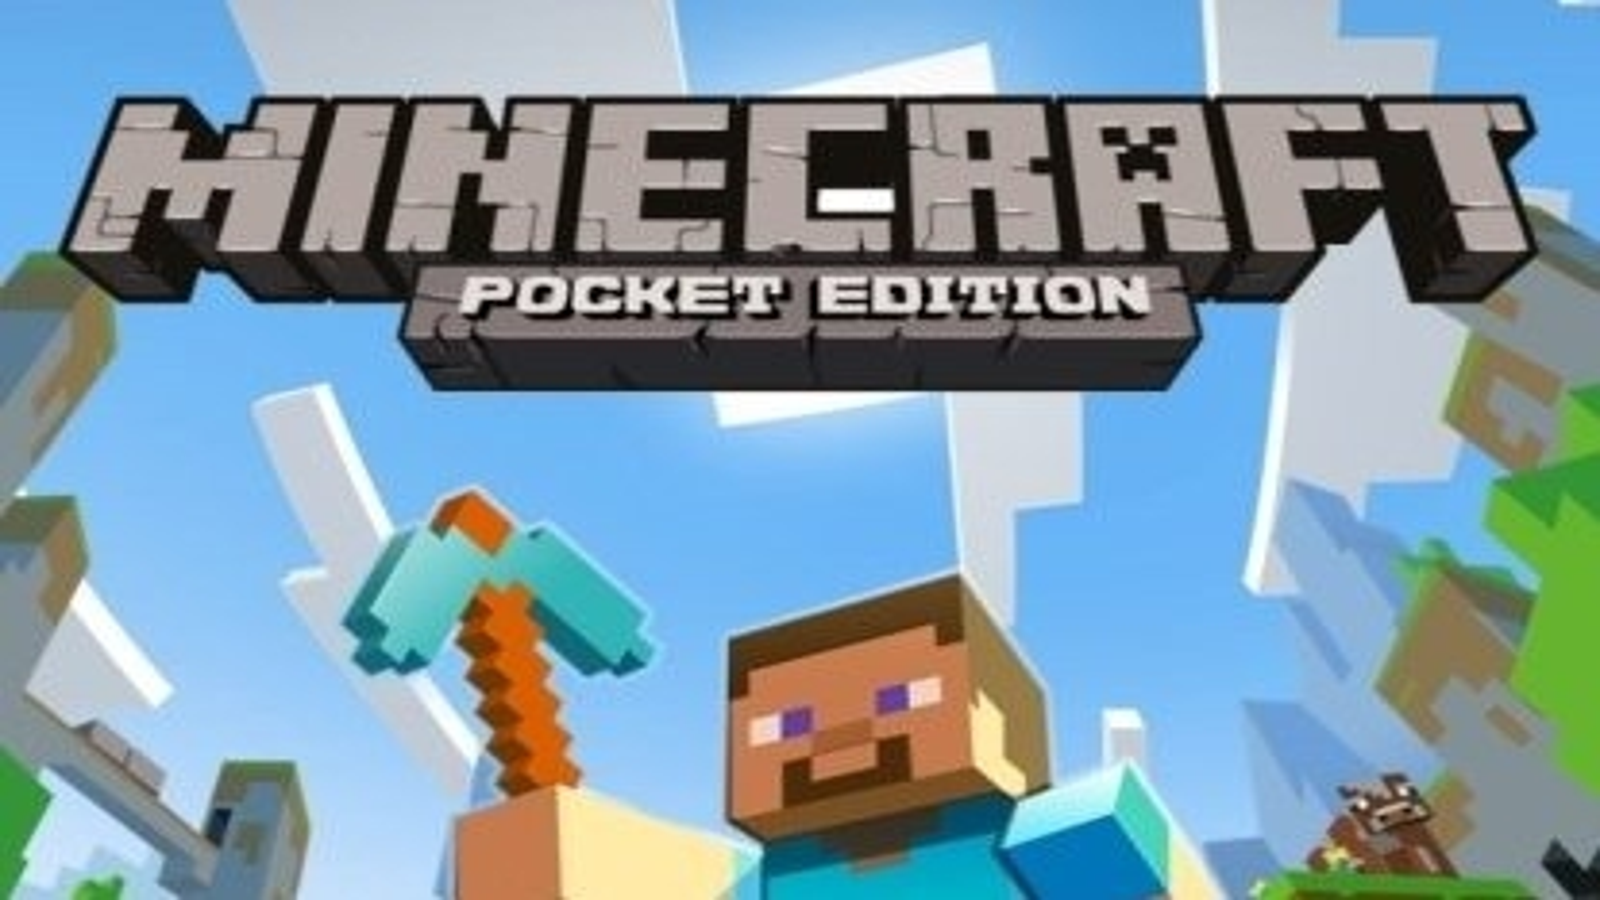 Minecraft Pocket Edition - Pockethost